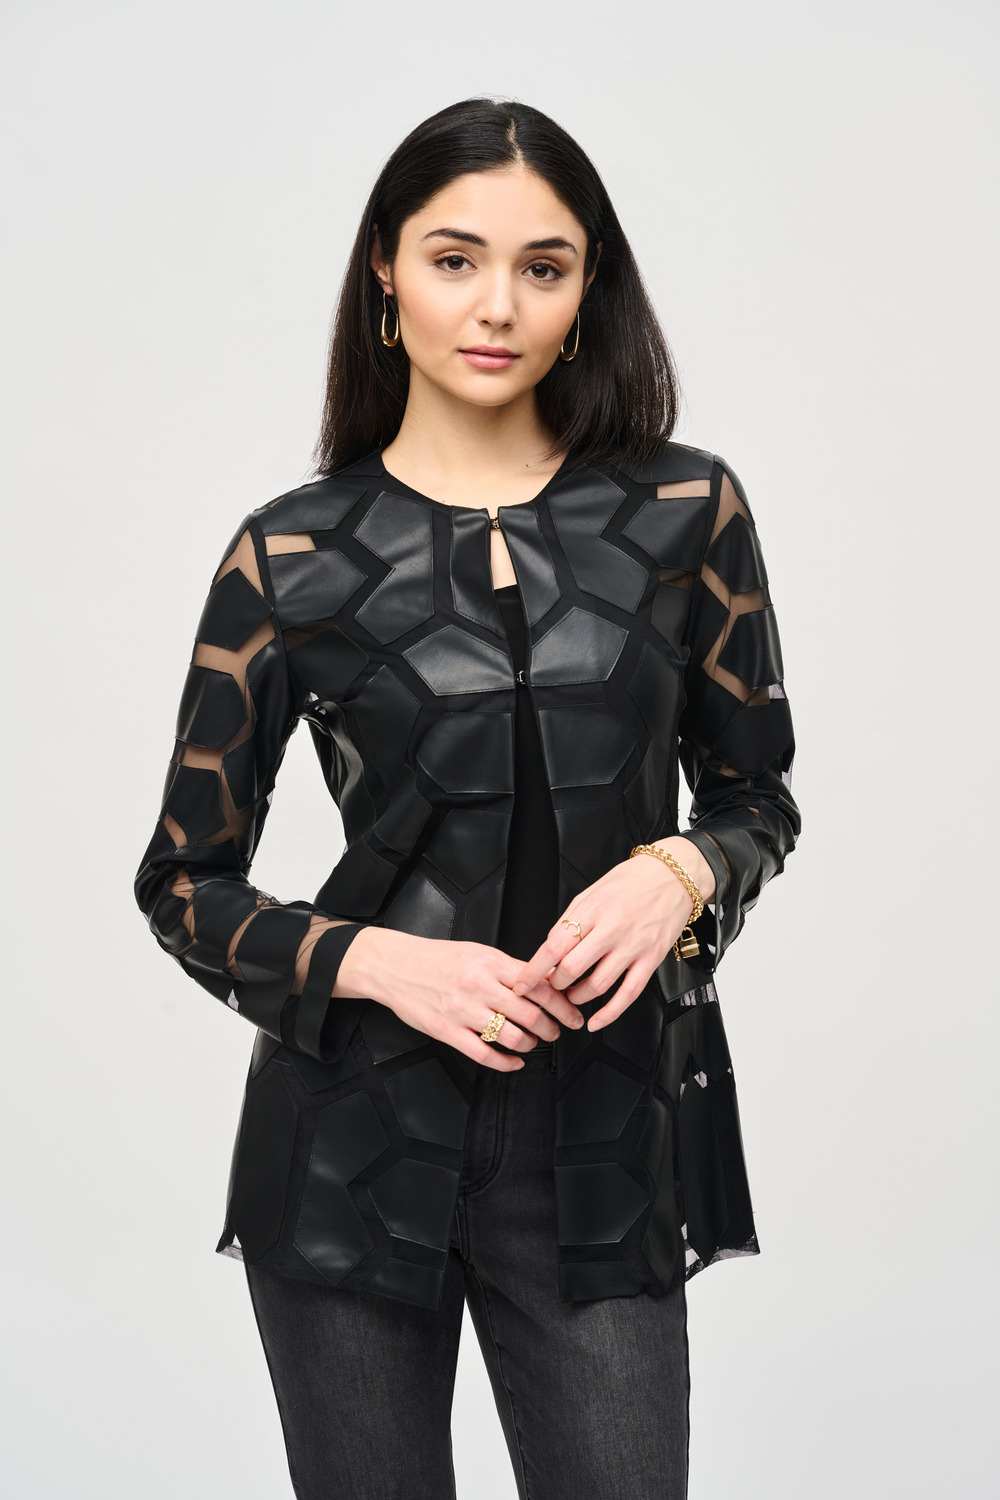 Geometric Pattern Dual Fabric Jacket Style 241905. Black/black